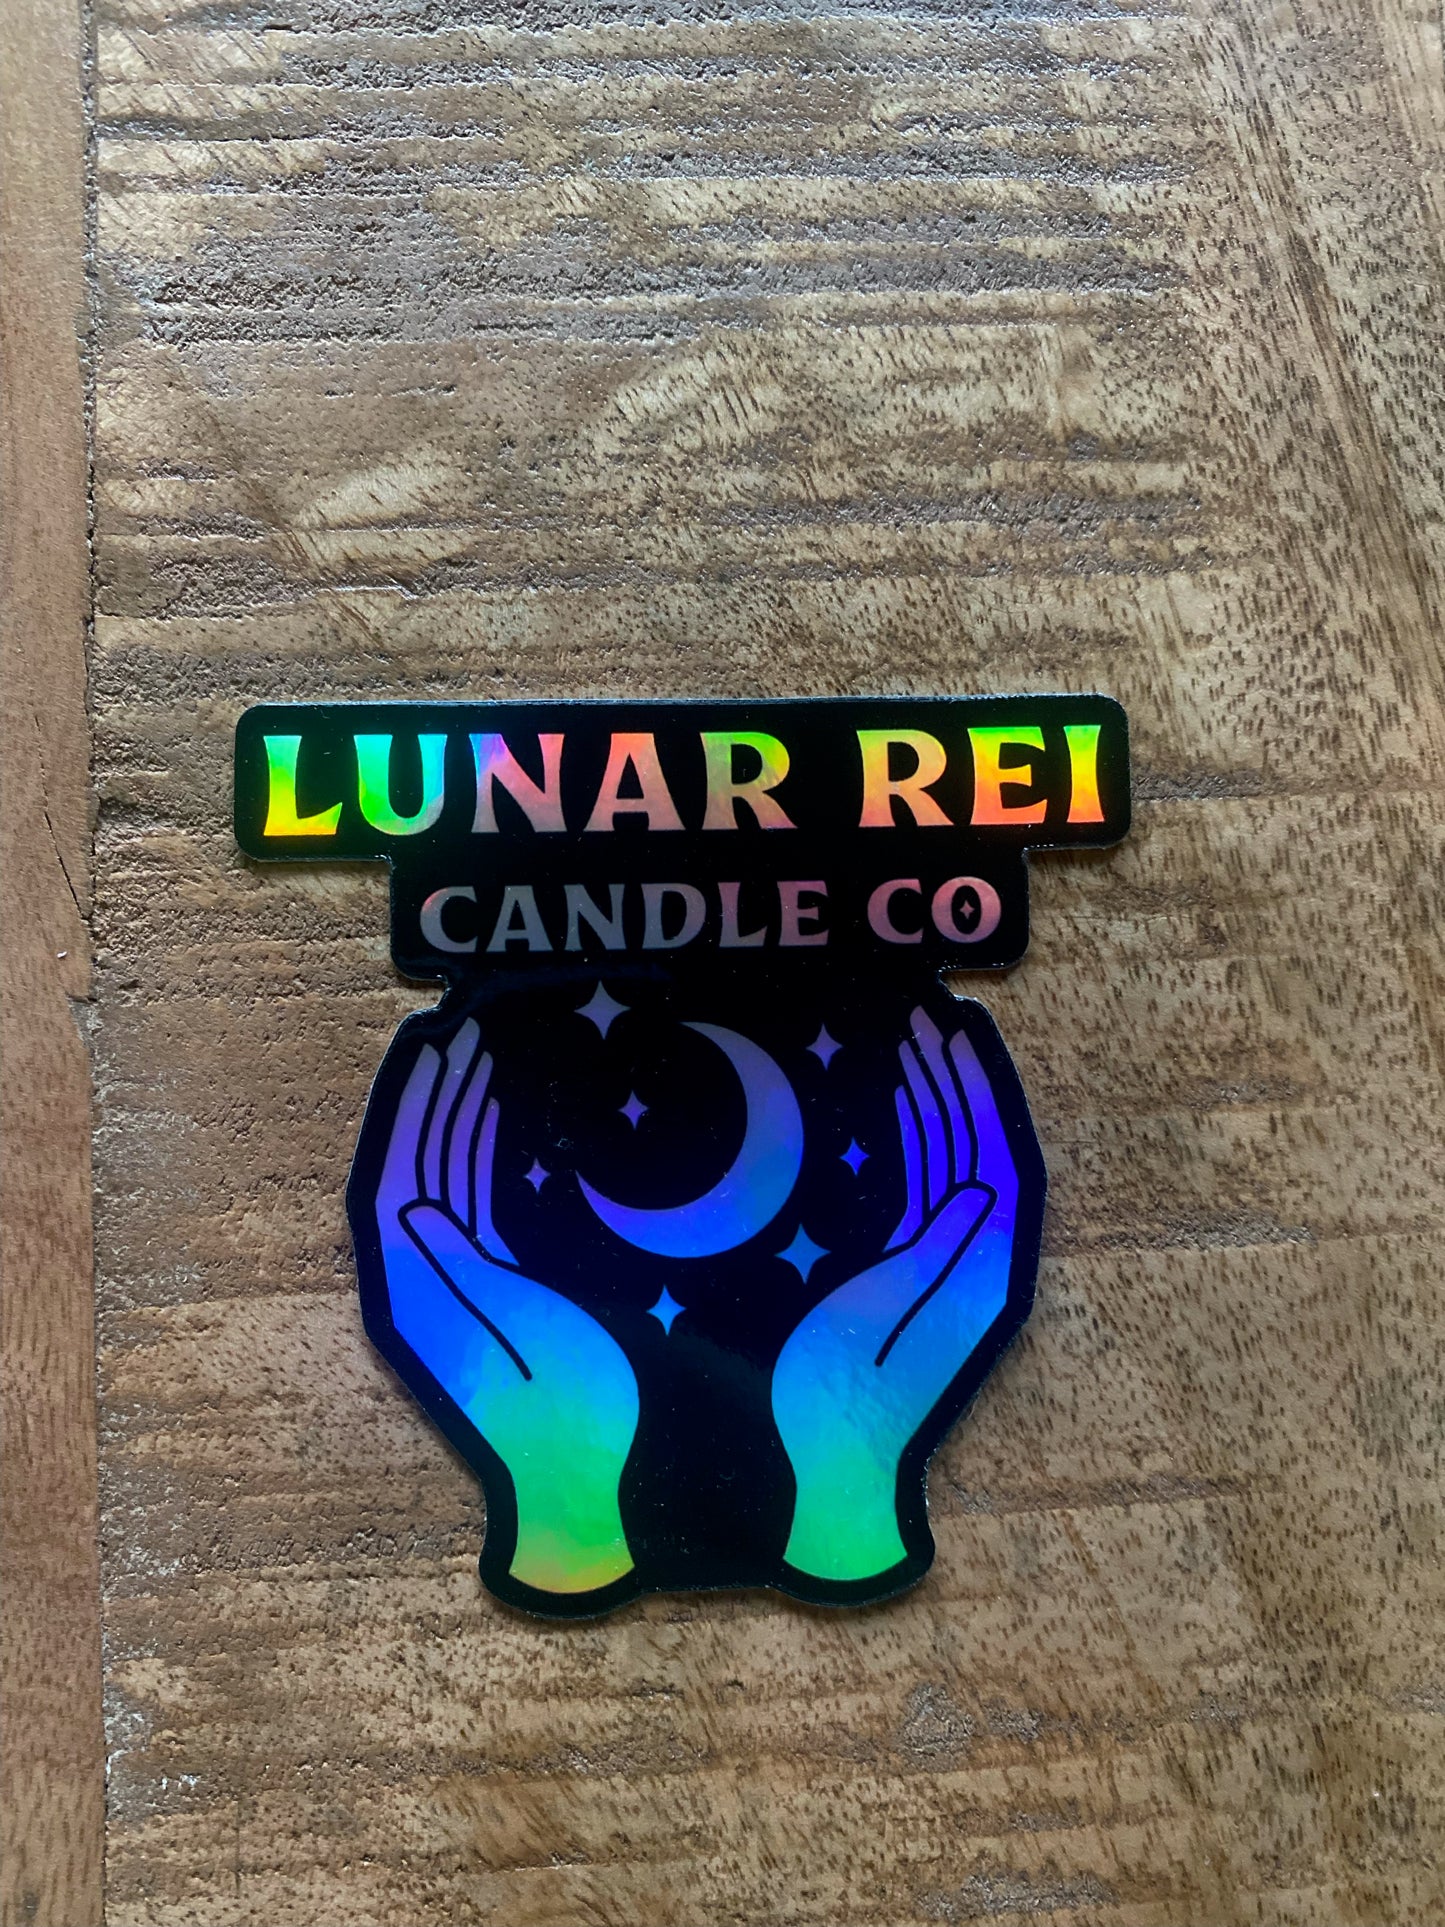 Lunar rei holographic sticker